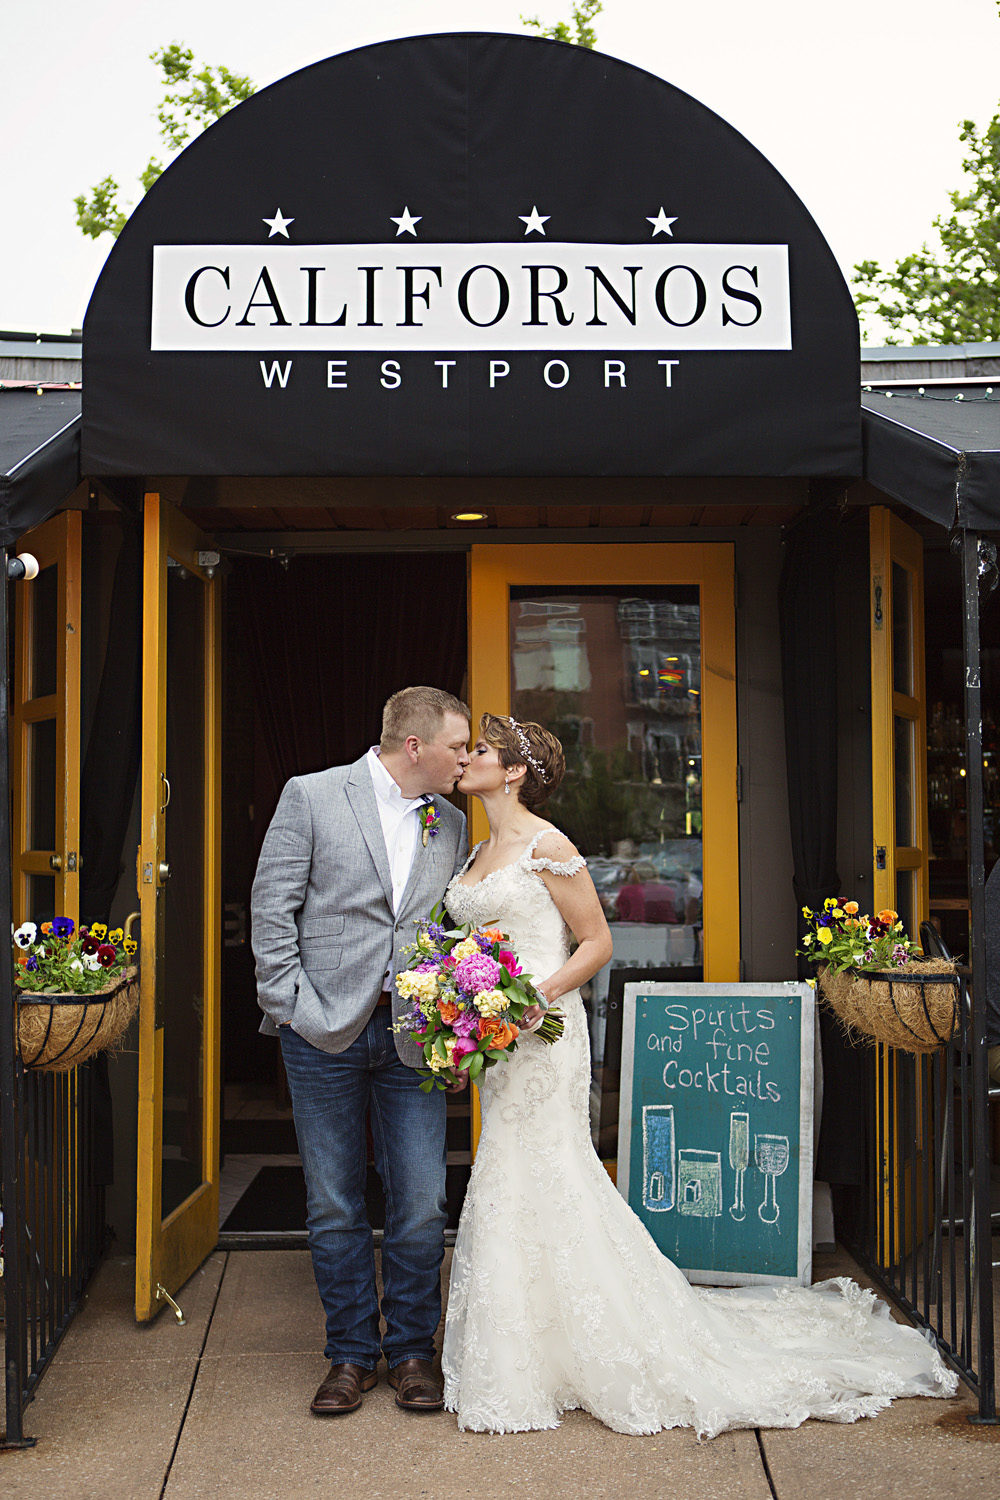 Simple Elegance Wedding at Californos in Wesport, MO